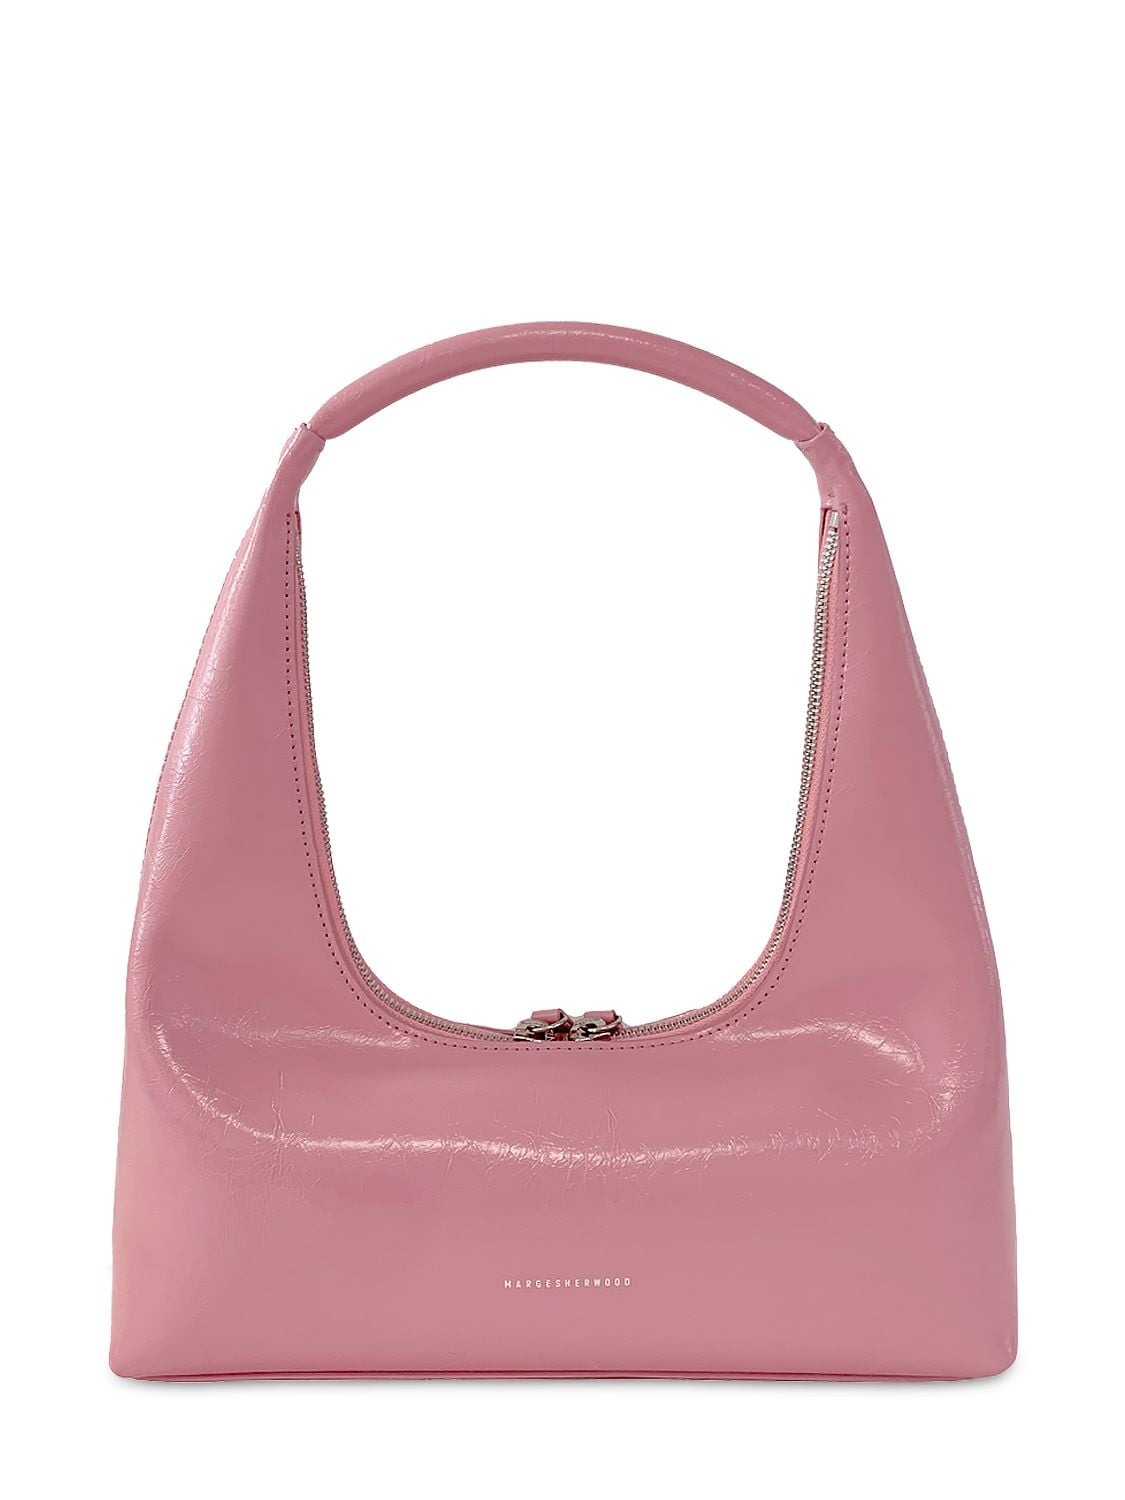 Marge Sherwood Hobo Leather Shoulder Bag In Candy Pink Crinkle | ModeSens